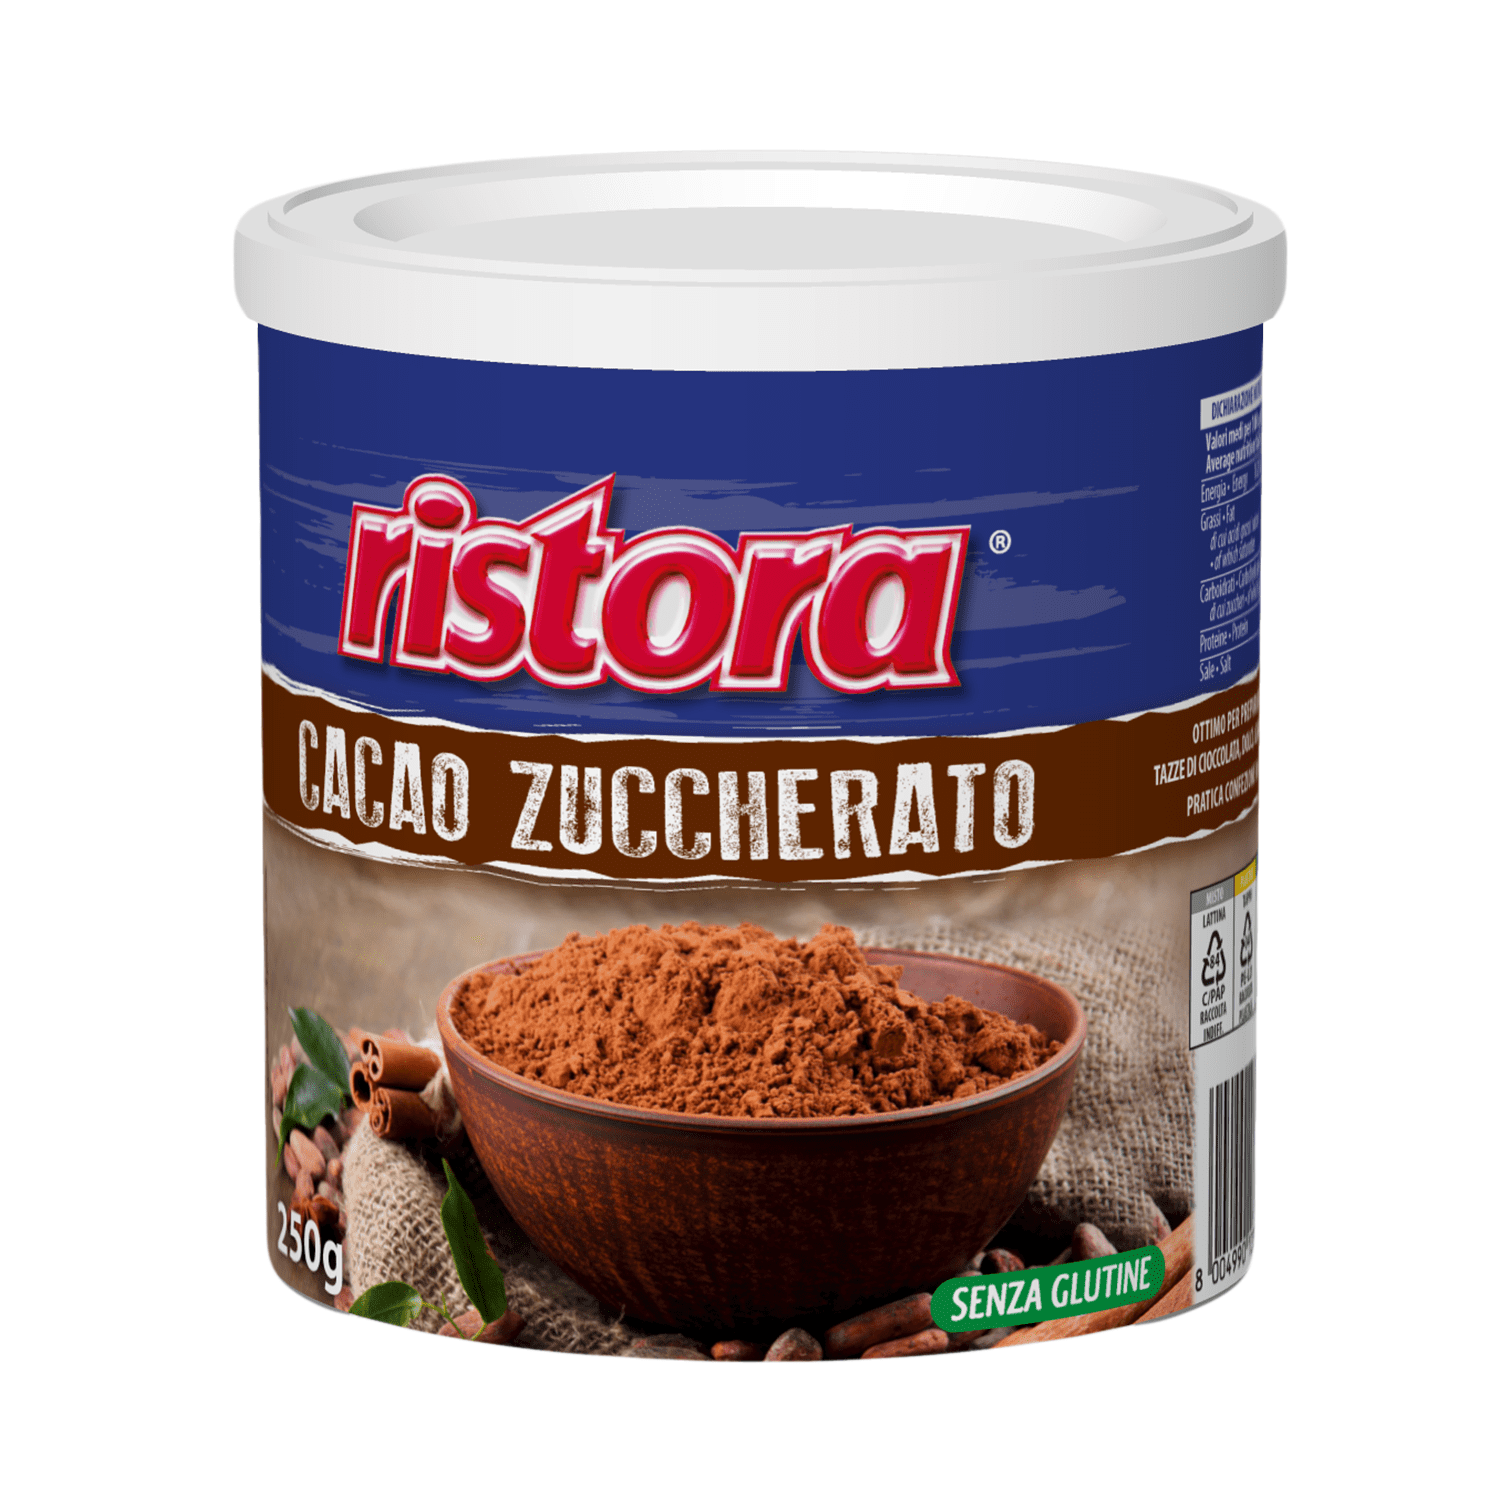 Какао RISTORA растворимый Cacao zuccherato 250 гр - фото 1